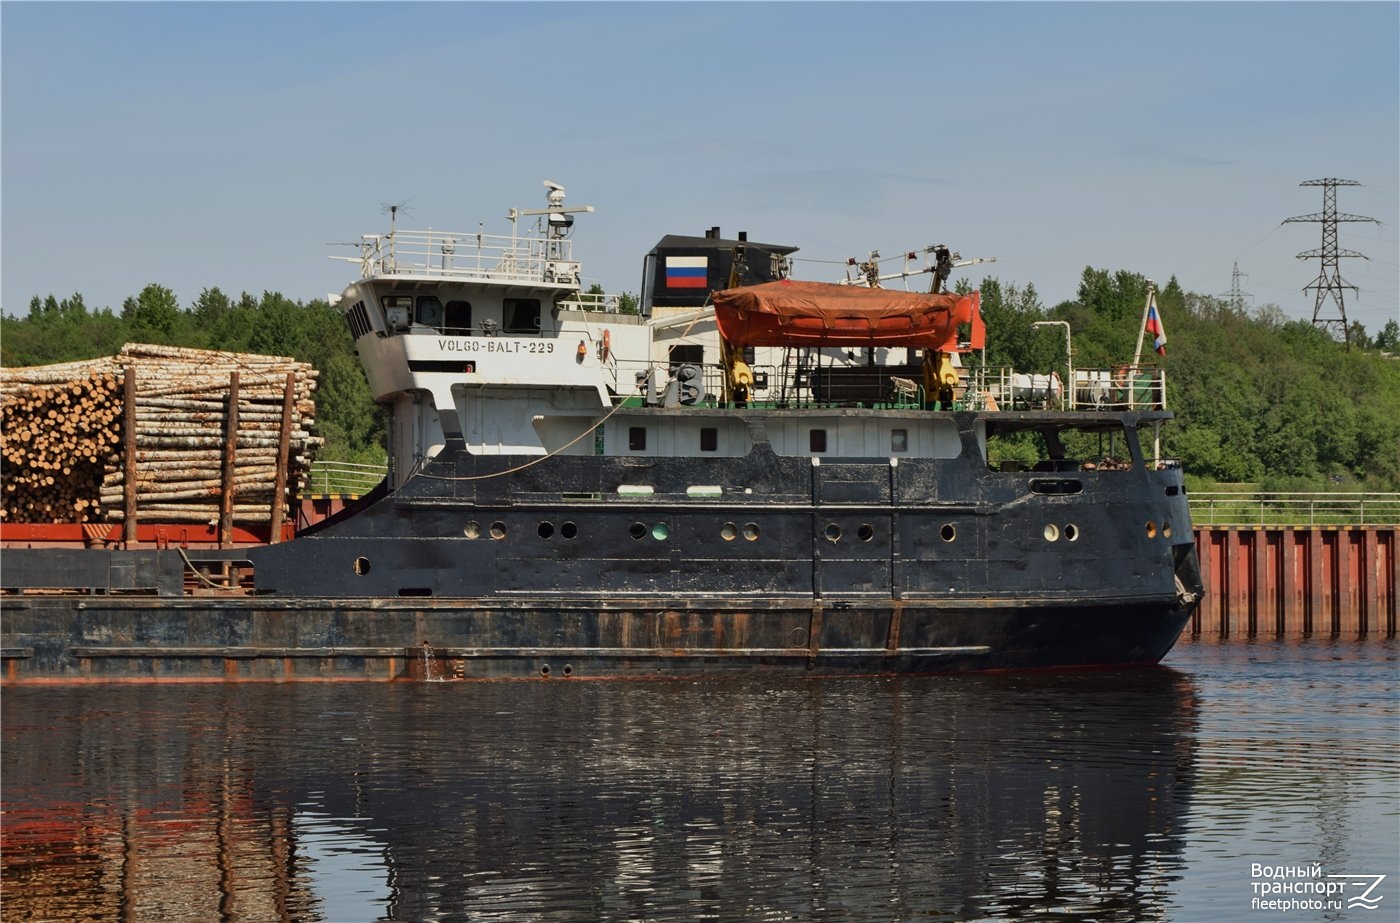 Волго-Балт 229. Vessel superstructures